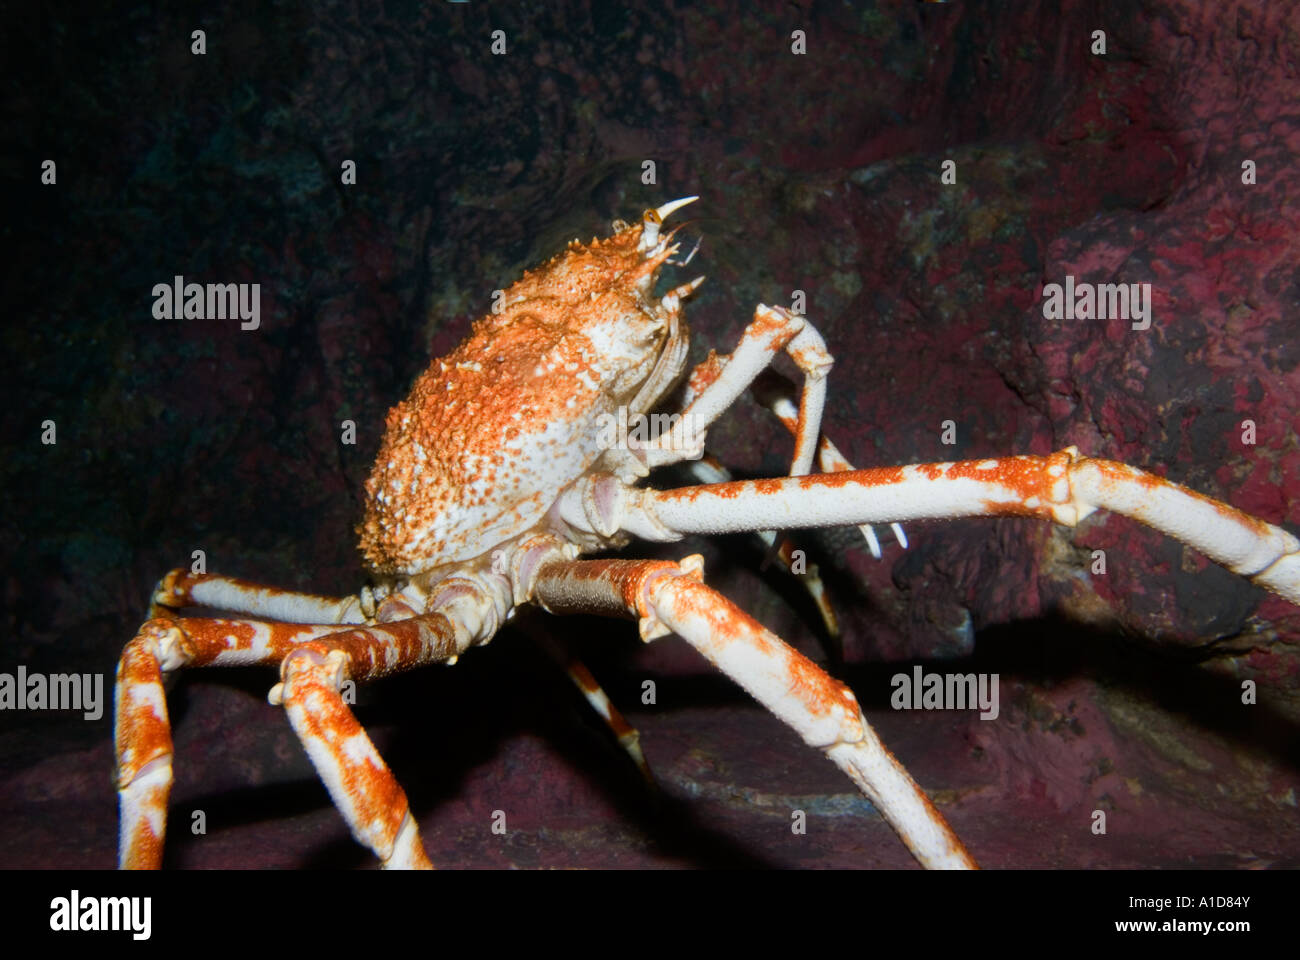 Die größte Krabbe lebendig GIANT SPIDER greifen Macrocheira Kaempferi japanische Japan PACIFIC OCEAN SEA Stockfoto